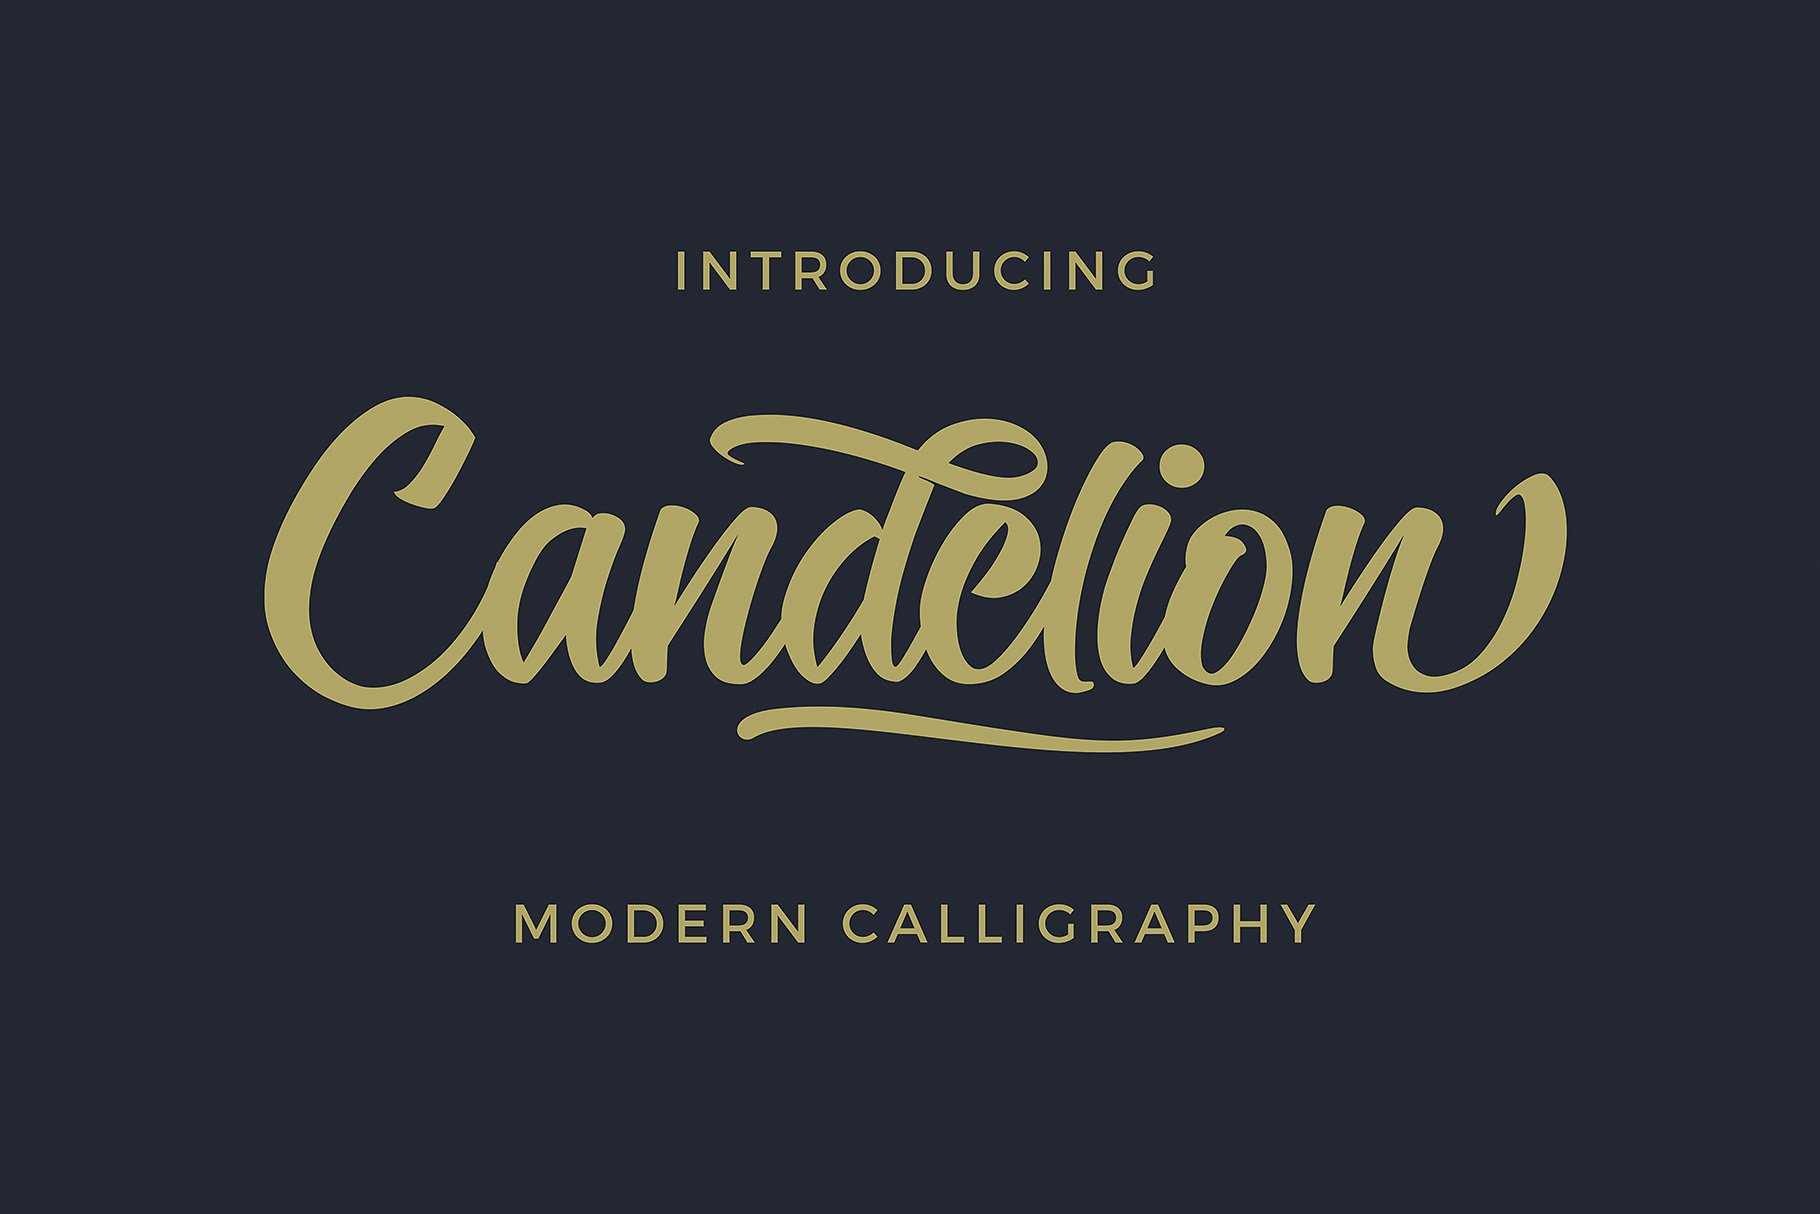 Candelion手工刻字现代书法字体 Candelion Hand Lettering Modern Calligraphy Font插图